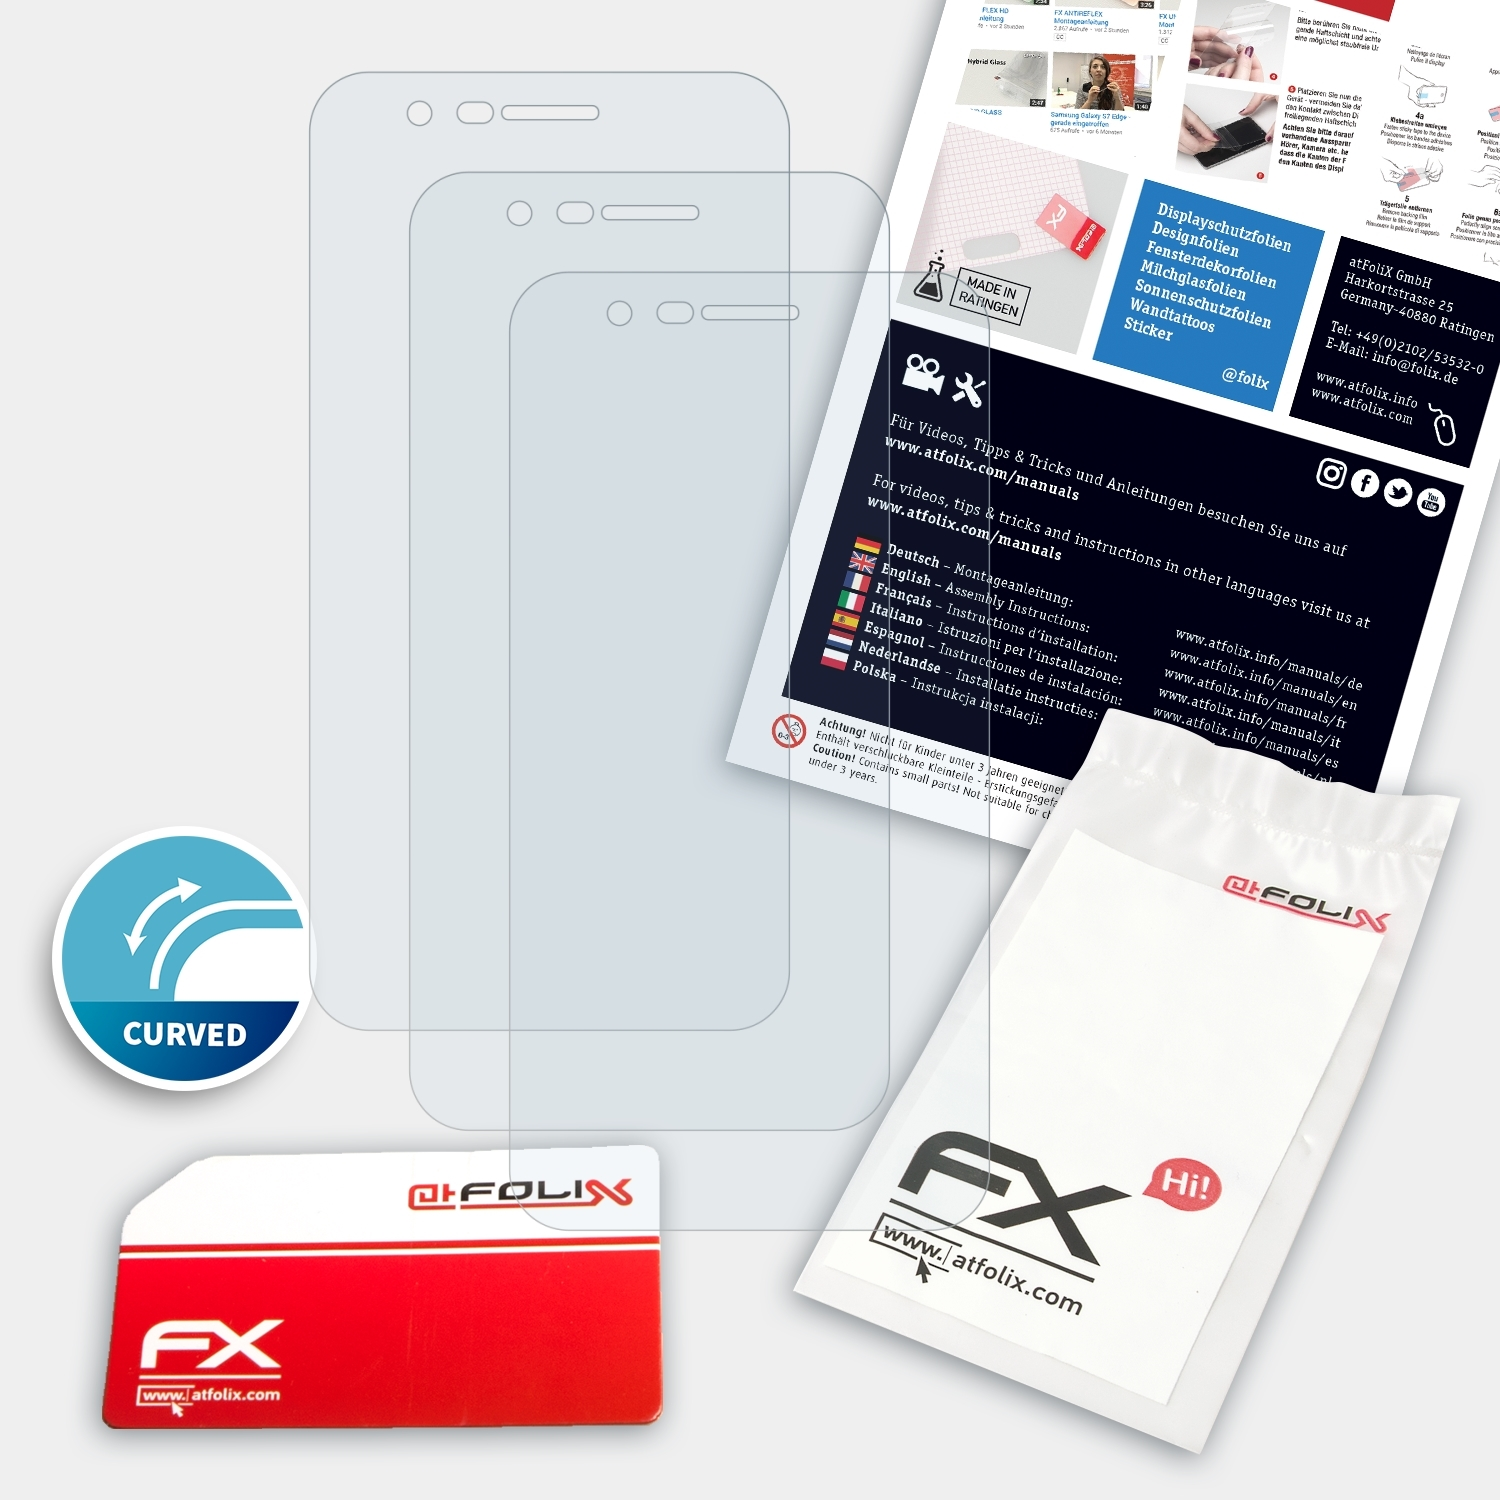 FX-ActiFleX Plus) ATFOLIX Displayschutz(für K11 LG 3x